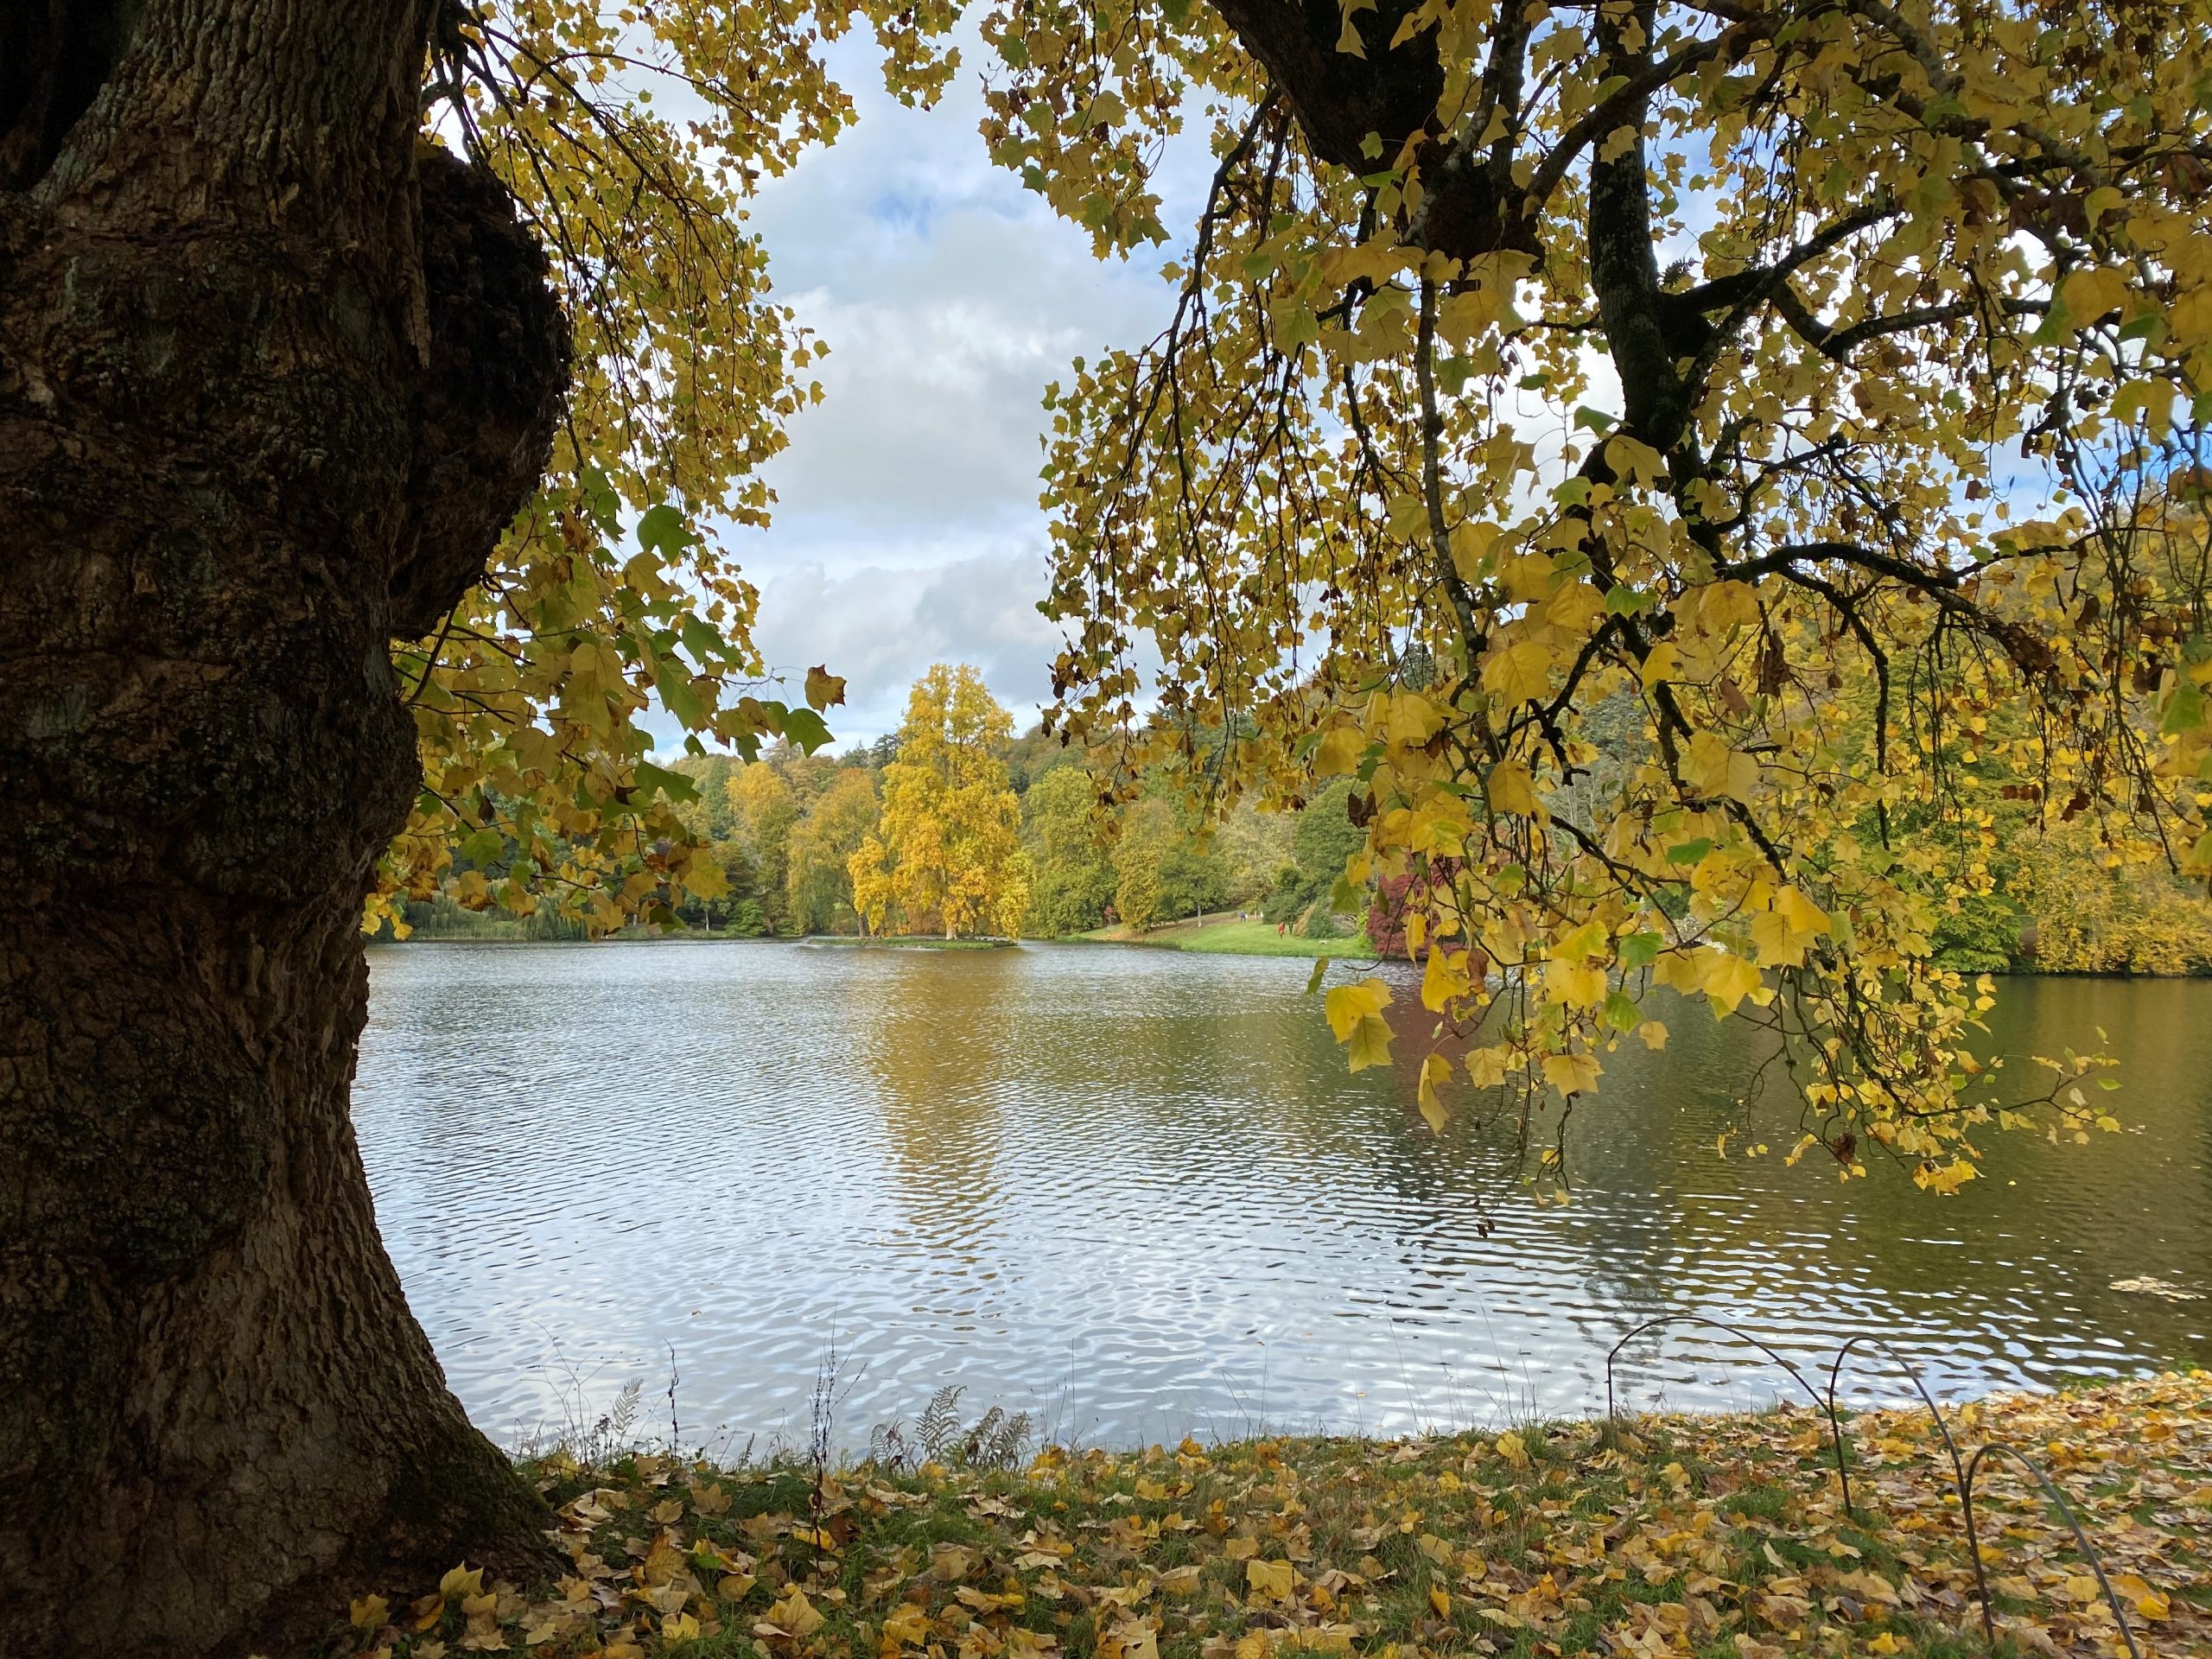 England’s autumn leaves